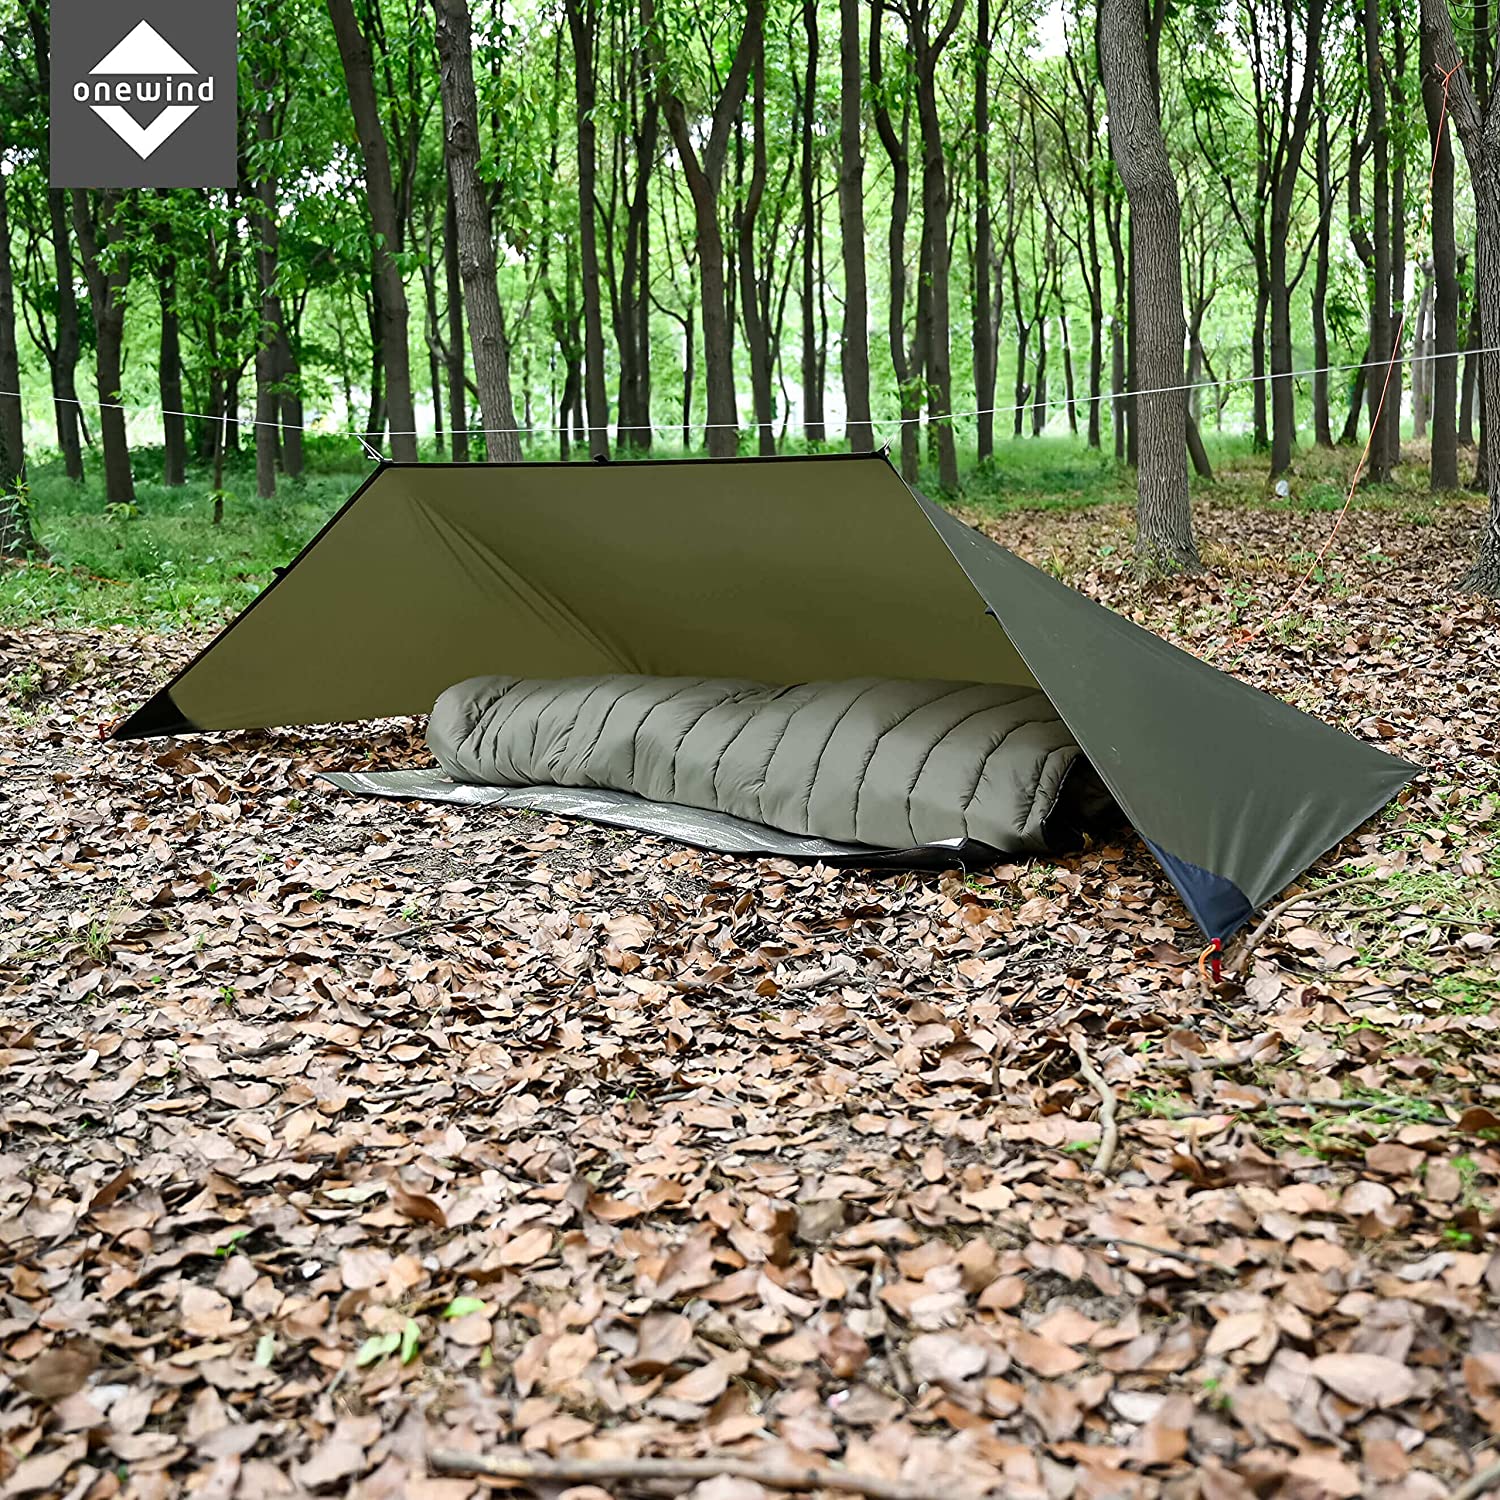 Ultralight Survival Shelter Set | Onewind Outdoors